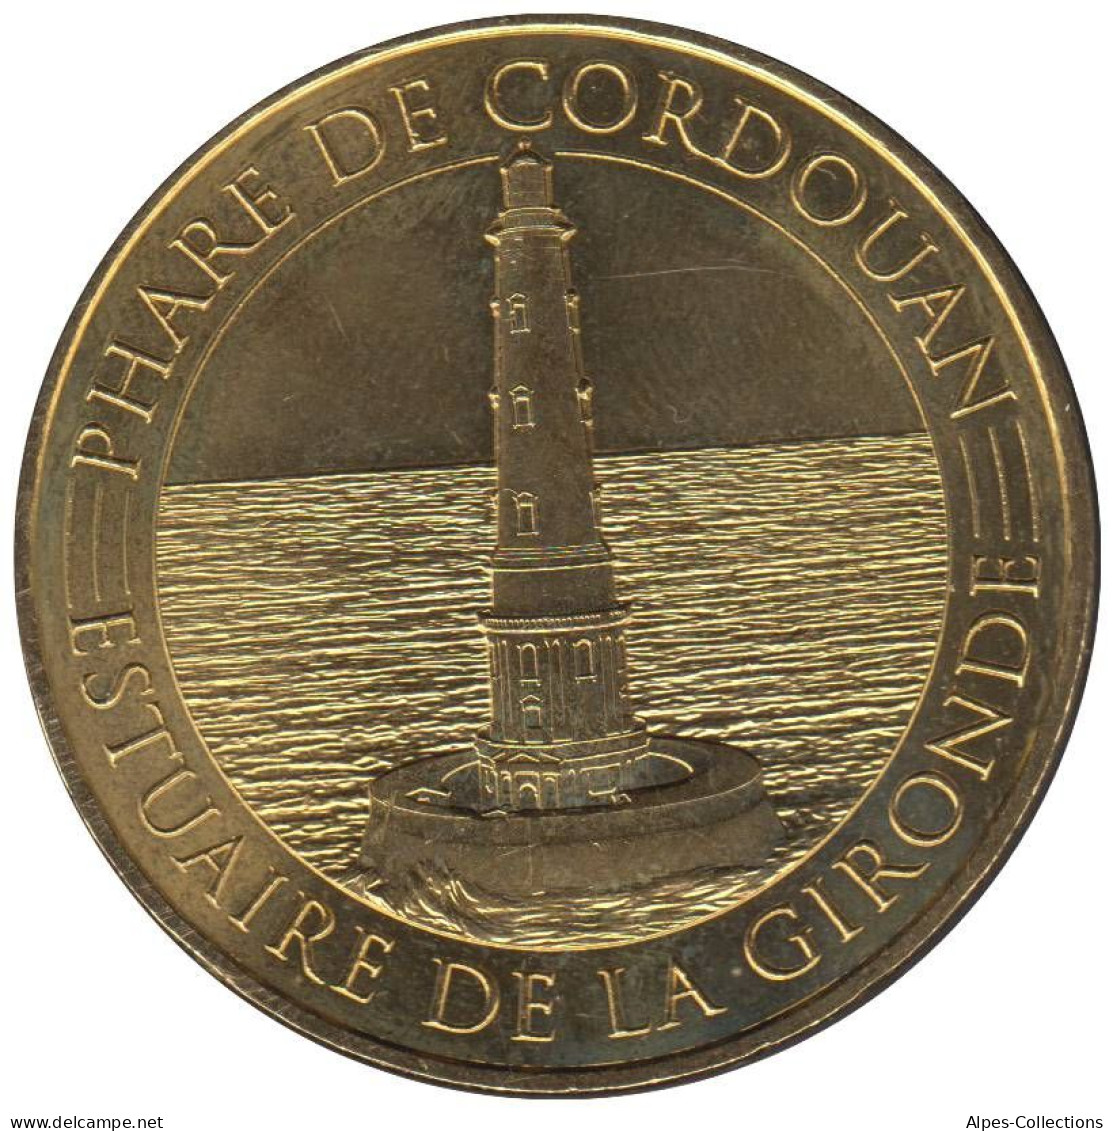 33-2203 - JETON TOURISTIQUE MDP - Phare De Cordouan - Estuaire Gironde - 2016.1 - 2016